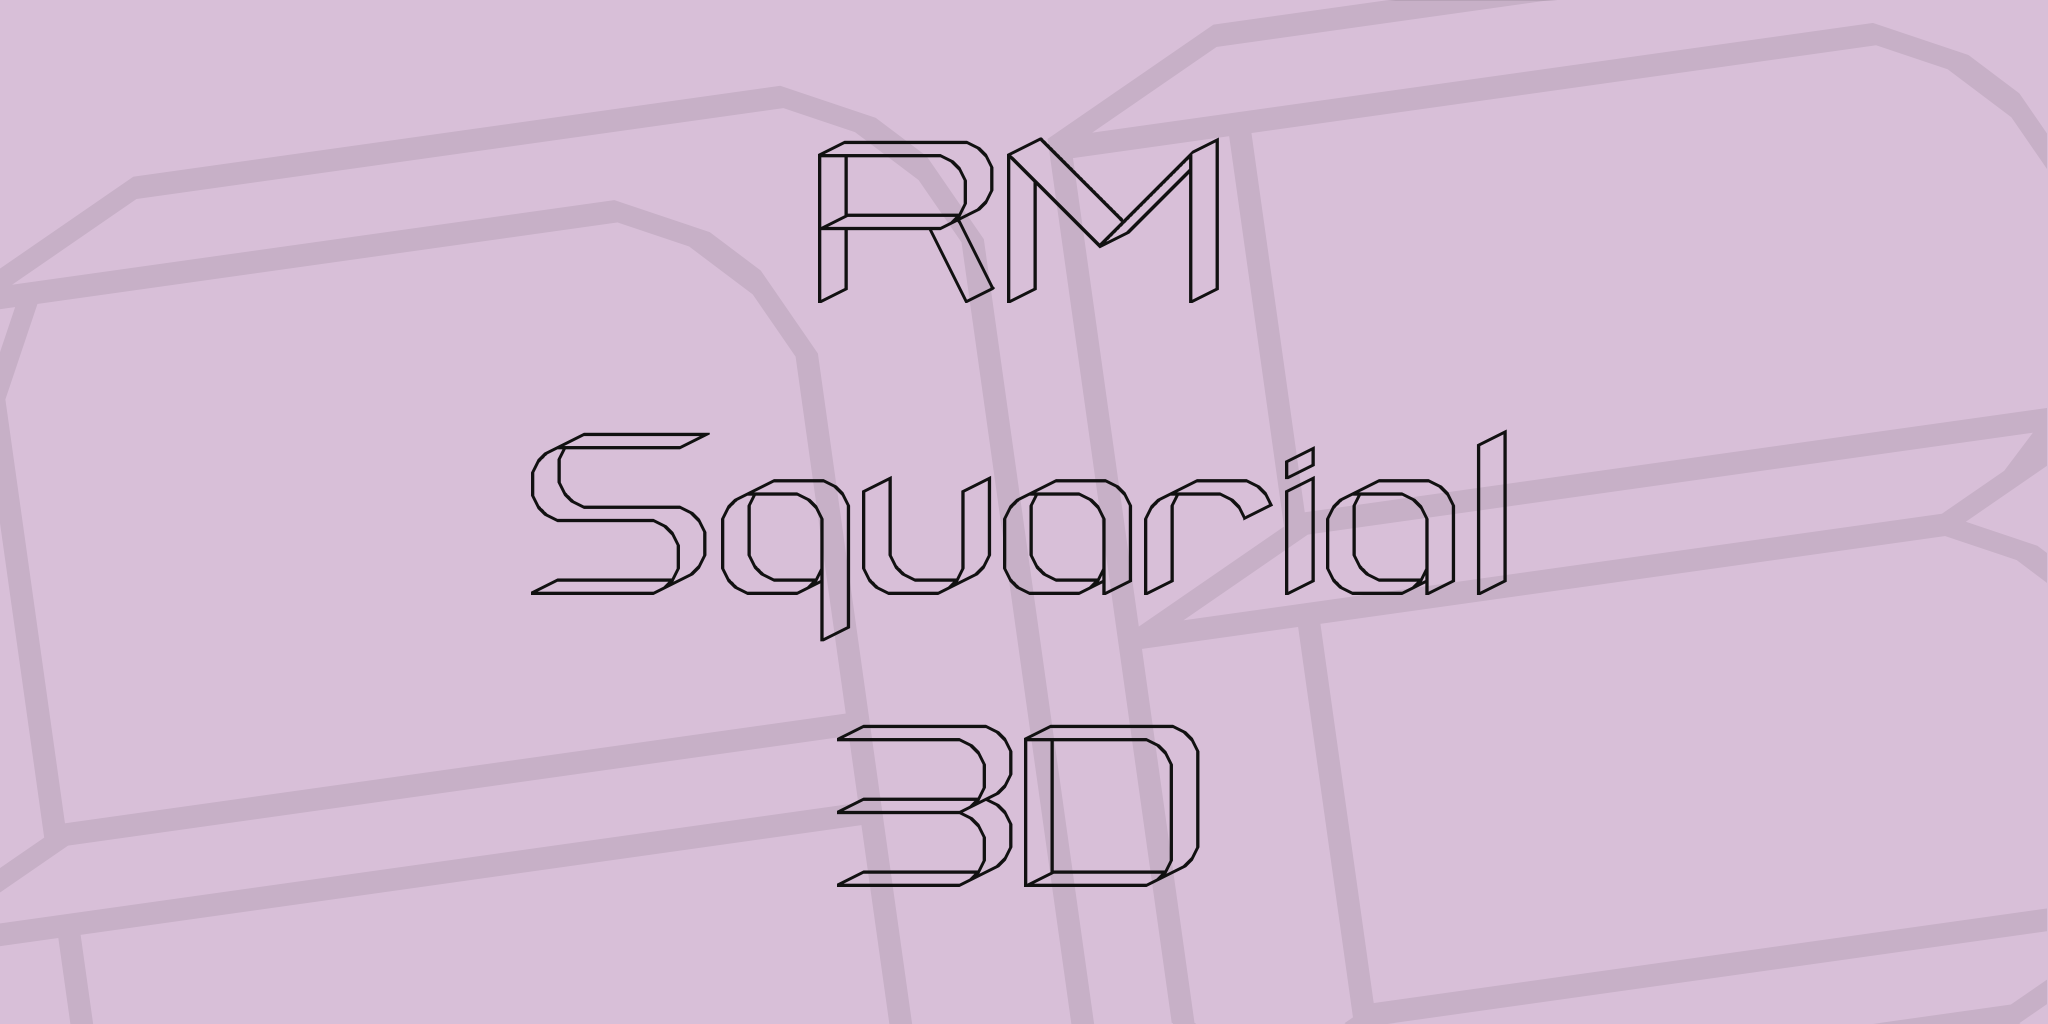 Rm Squarial 3D